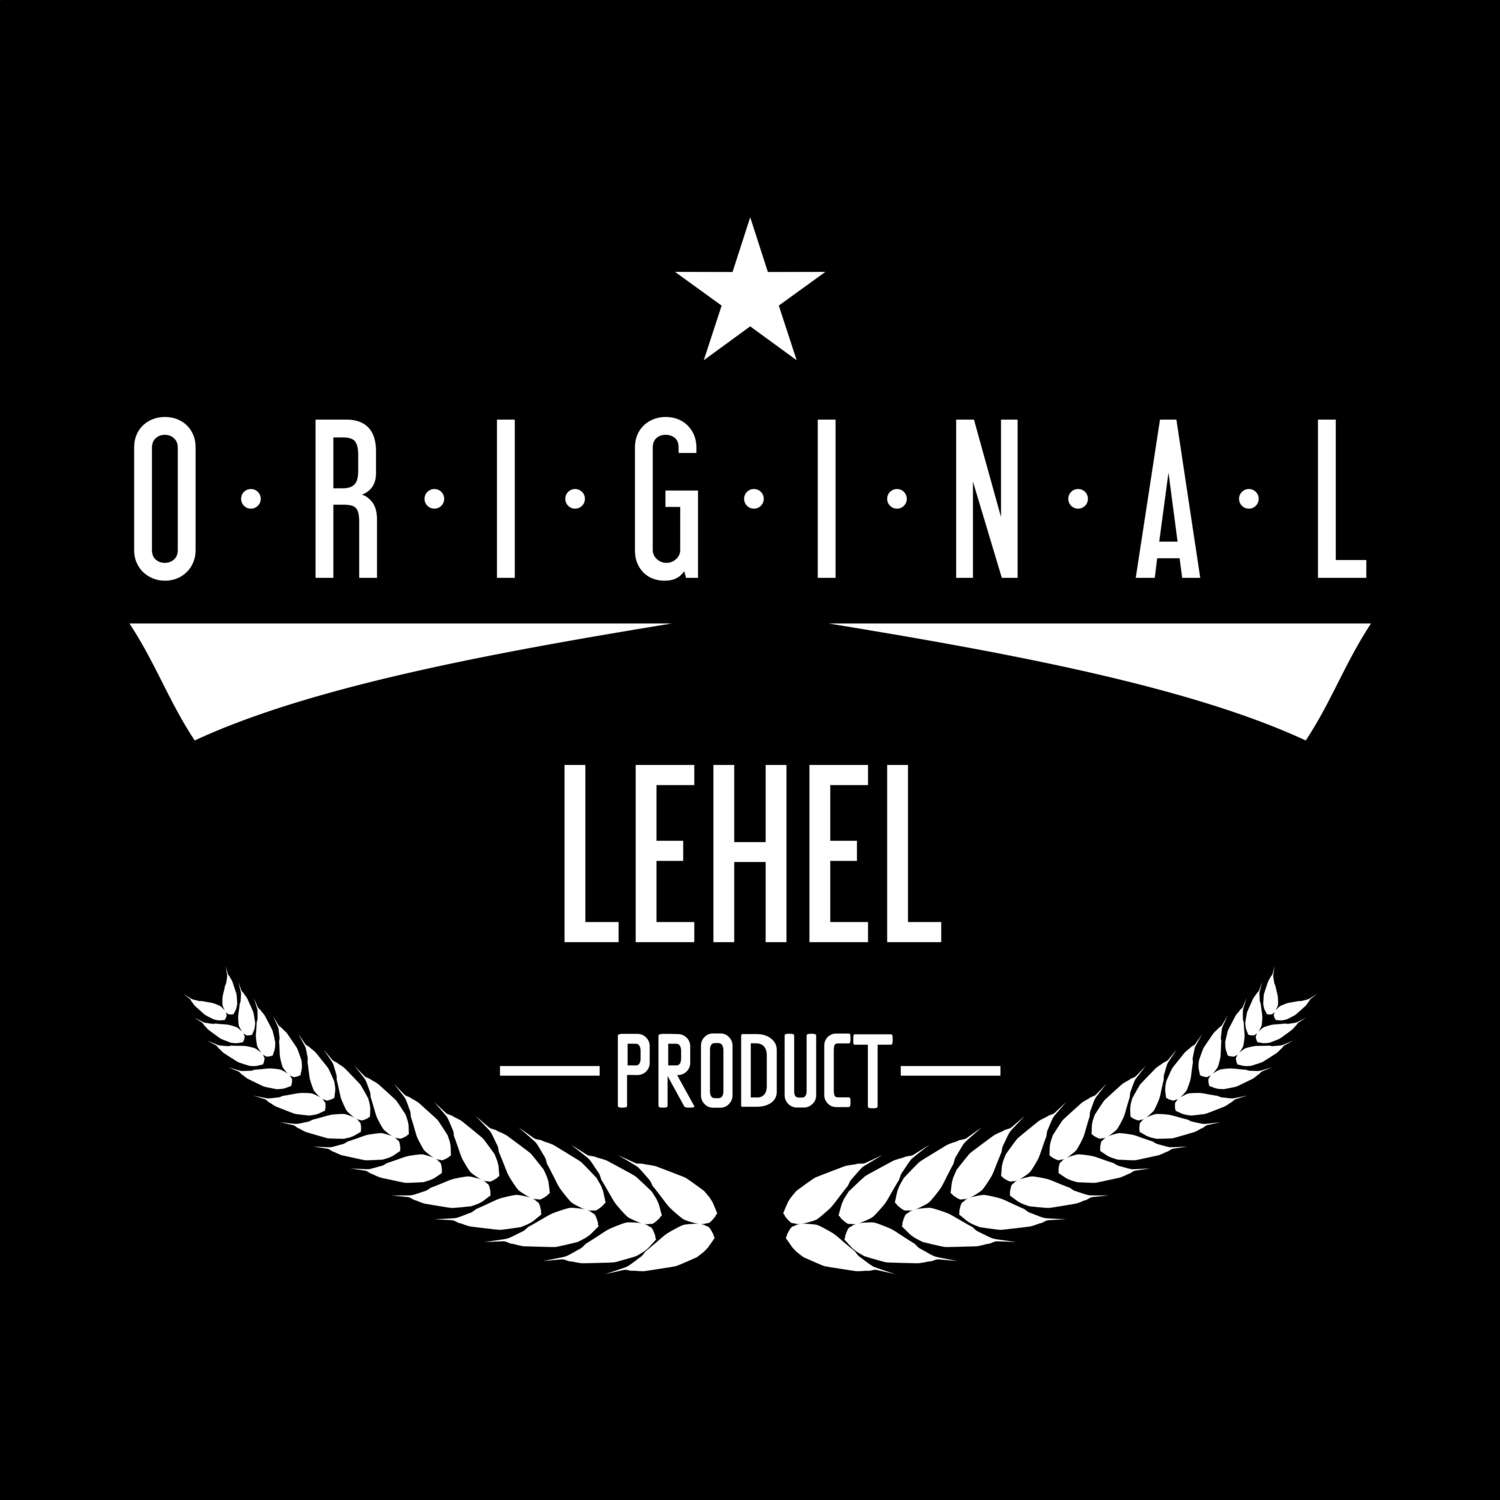 Lehel T-Shirt »Original Product«